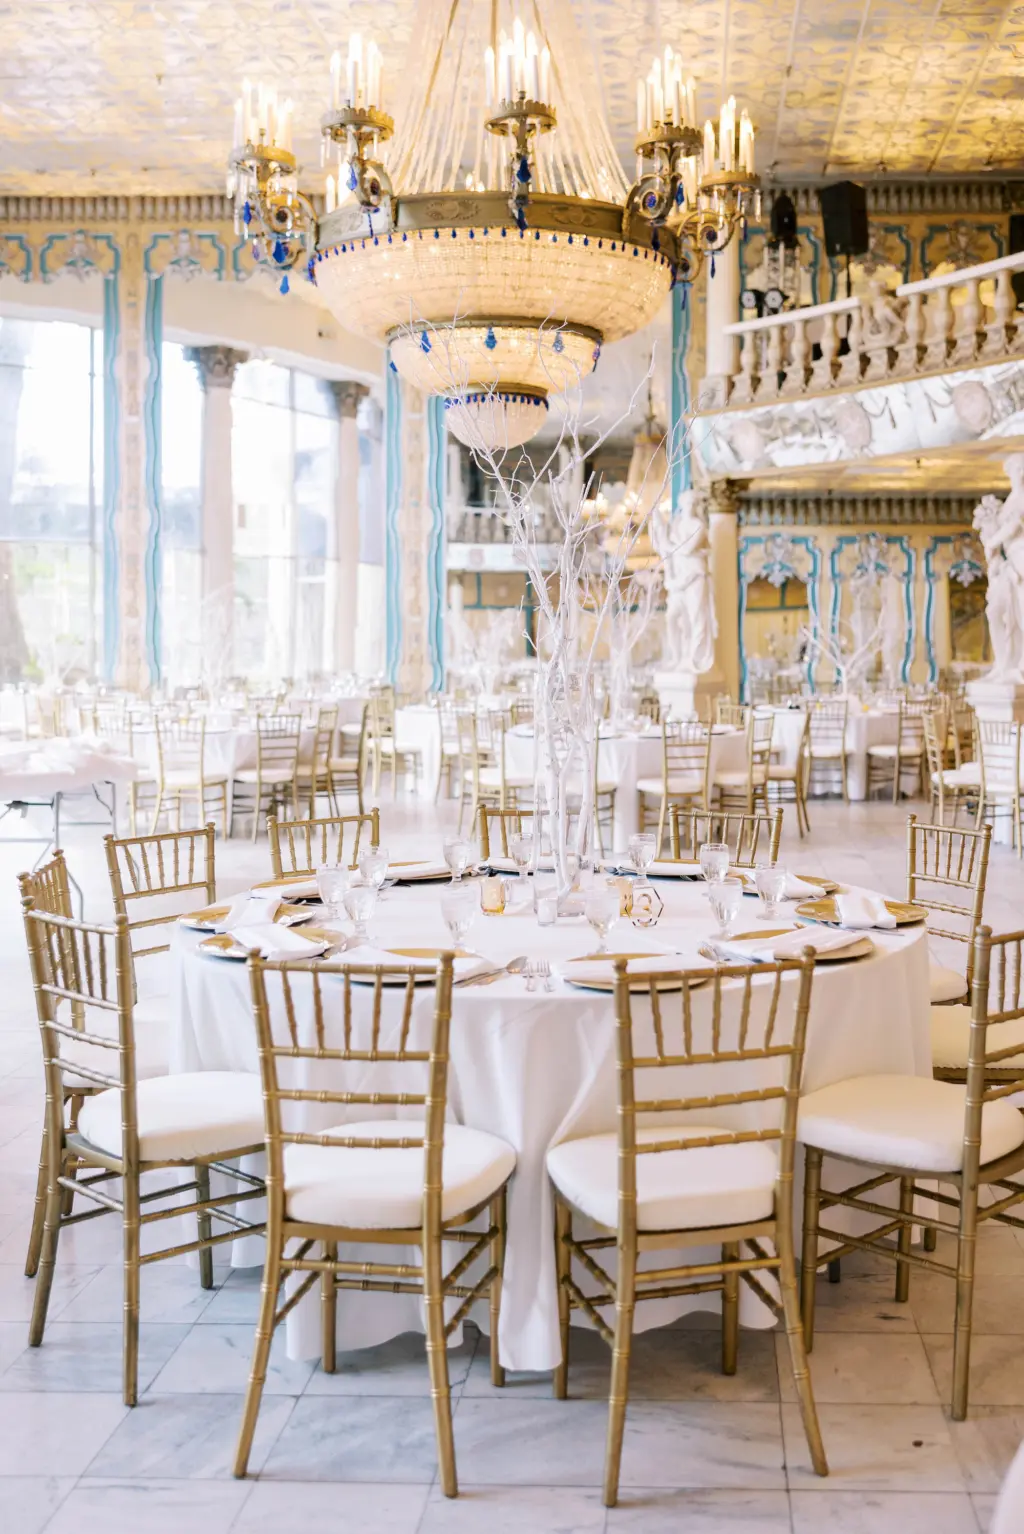 White Birchwood Tree Centerpiece Ideas | Gold and White Winter Wonderland Wedding Reception Ideas | Tampa Bay Venue Kapok Special Events | Florist Lemon Drops Weddings & Events